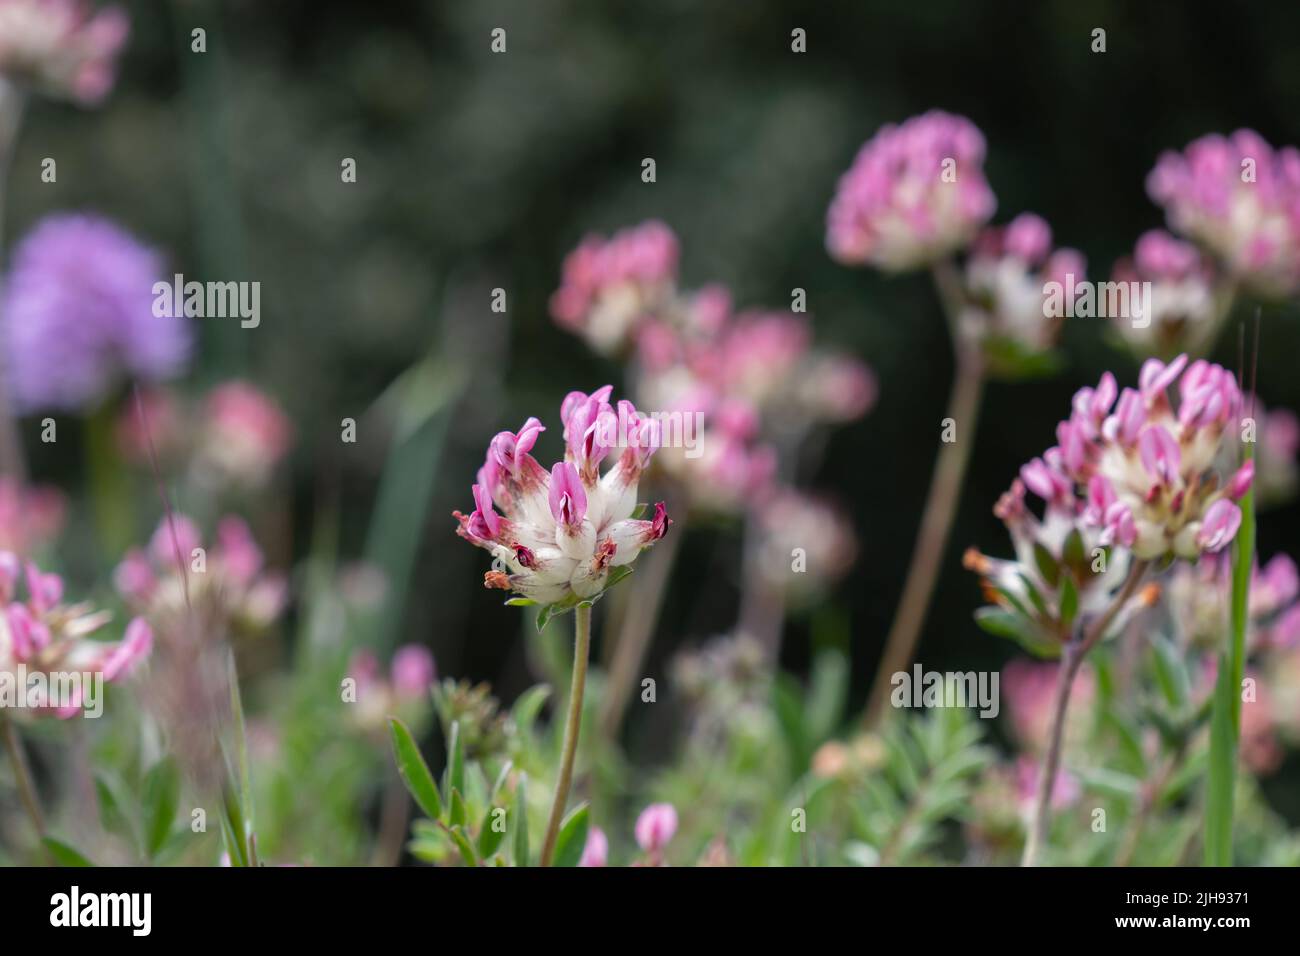 Anthyllis vulneraria subsp. iberica pink flowers Stock Photo